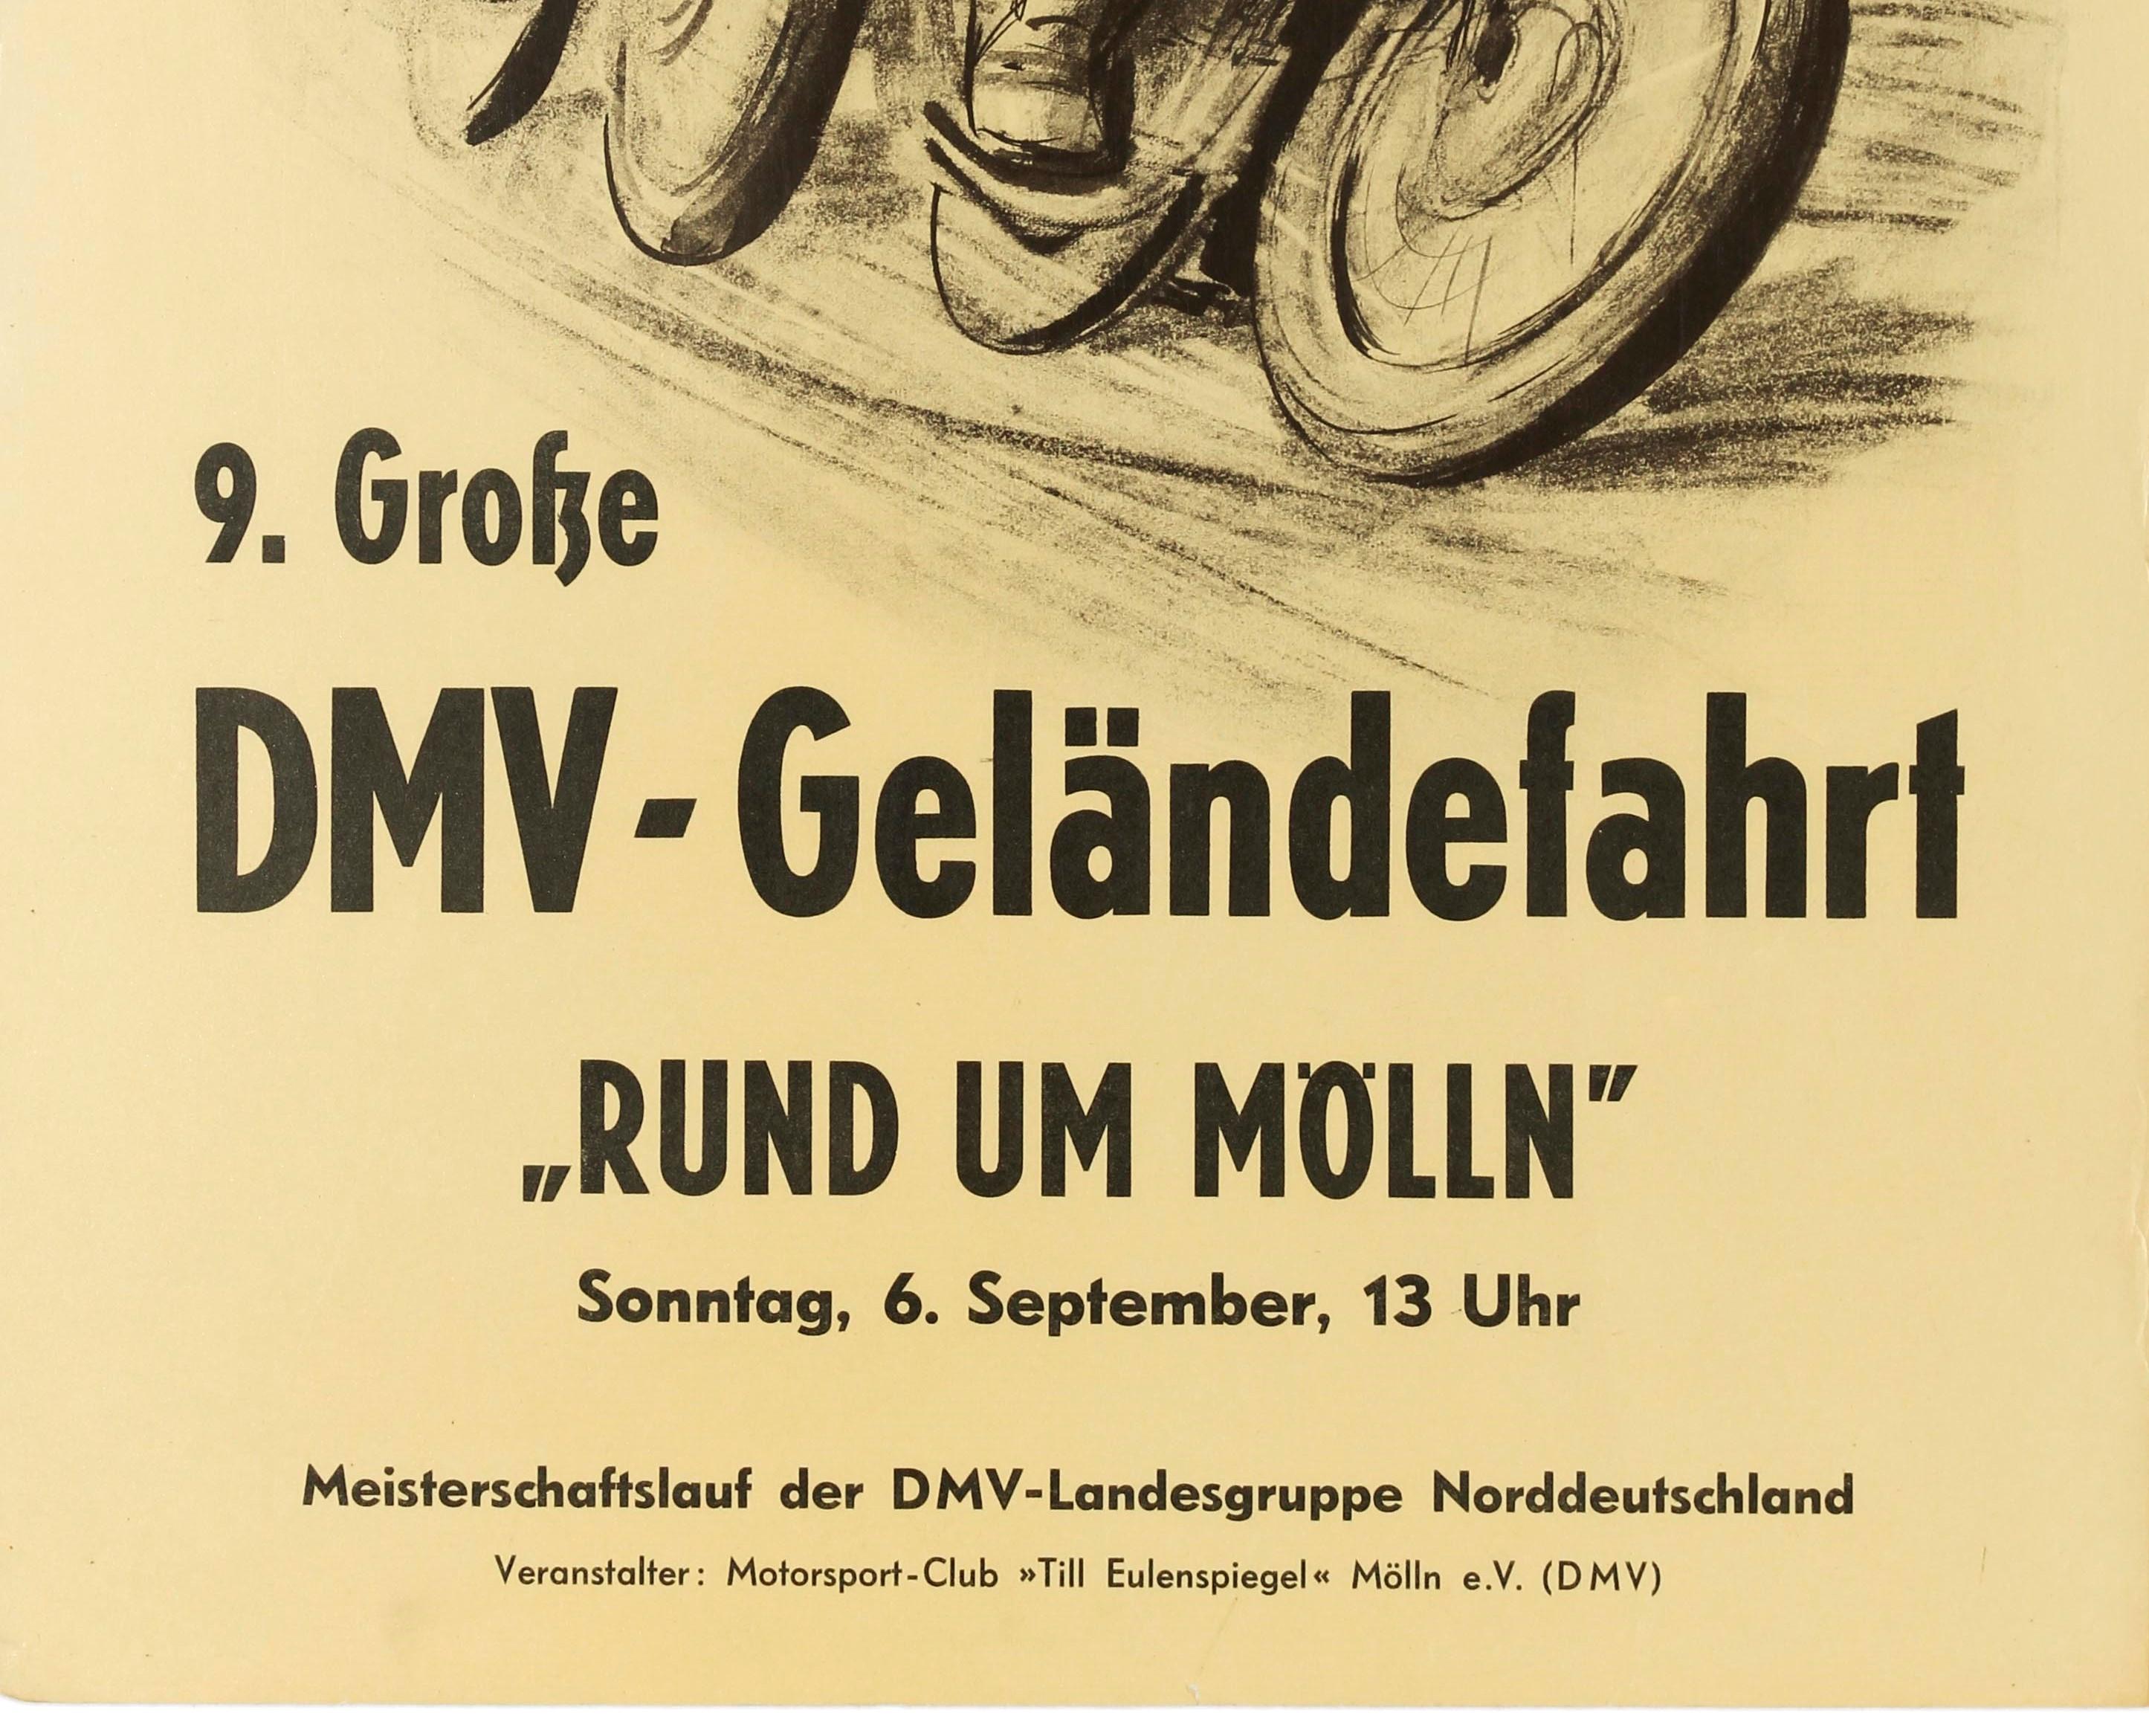 German Original Vintage Poster Motocross DMV Gelandefahrt Rund Im Molln Motorcycle Race